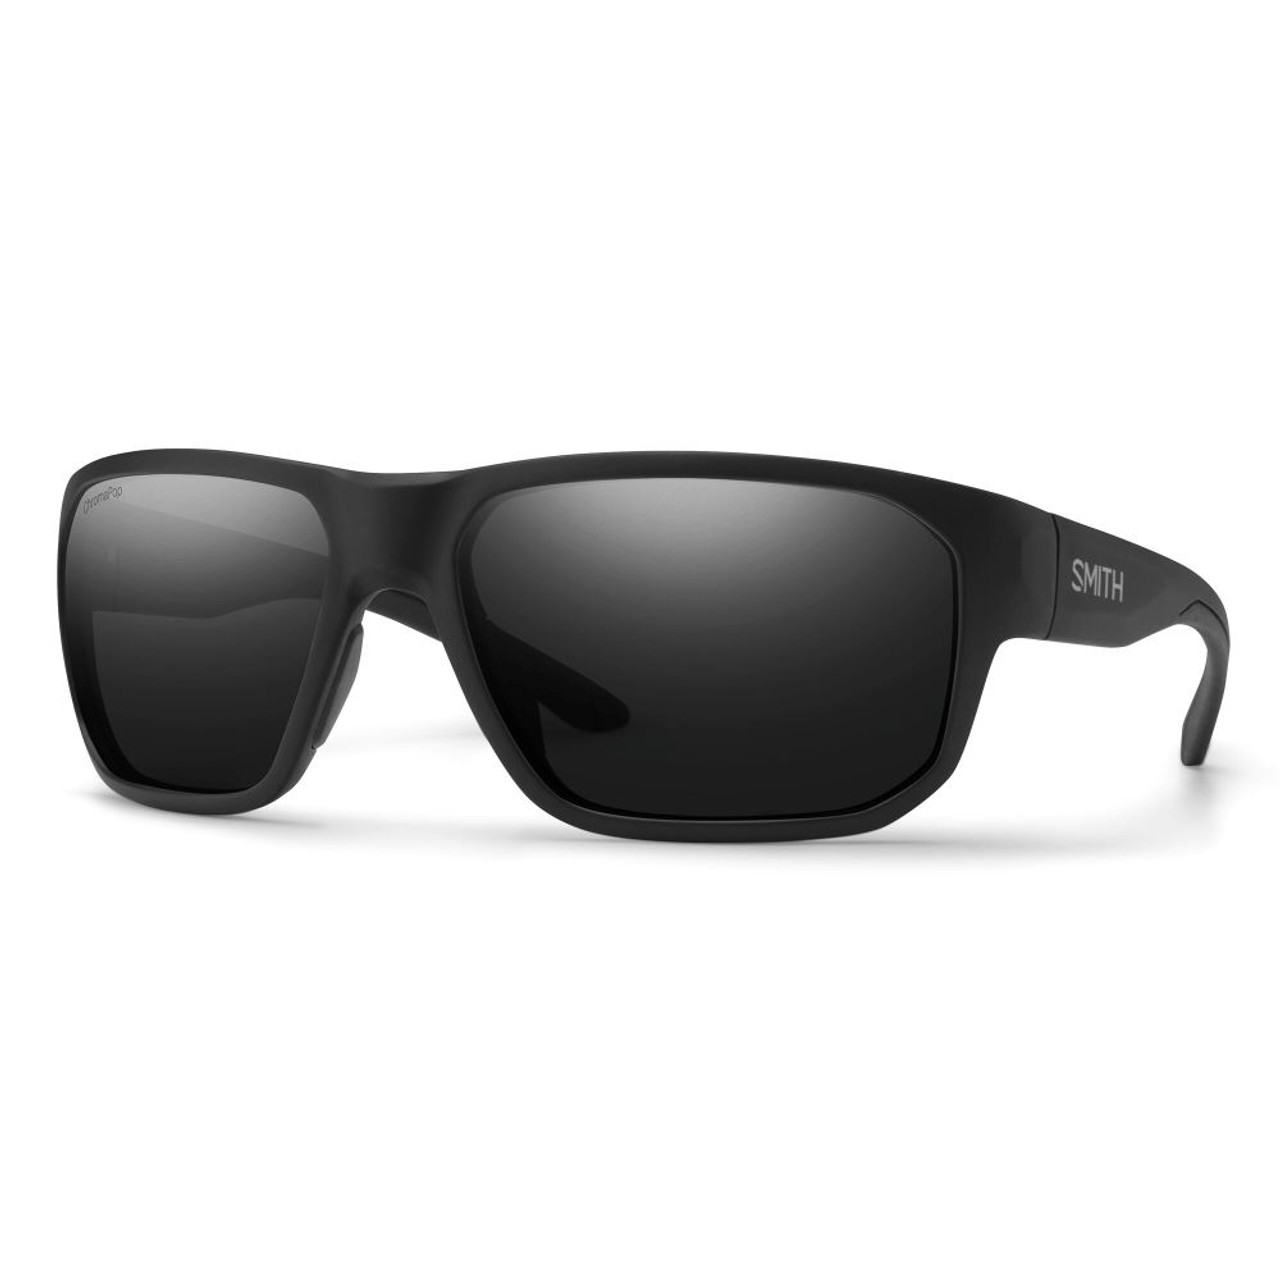 Smith Pursuit Sunglasses Eyewear Review